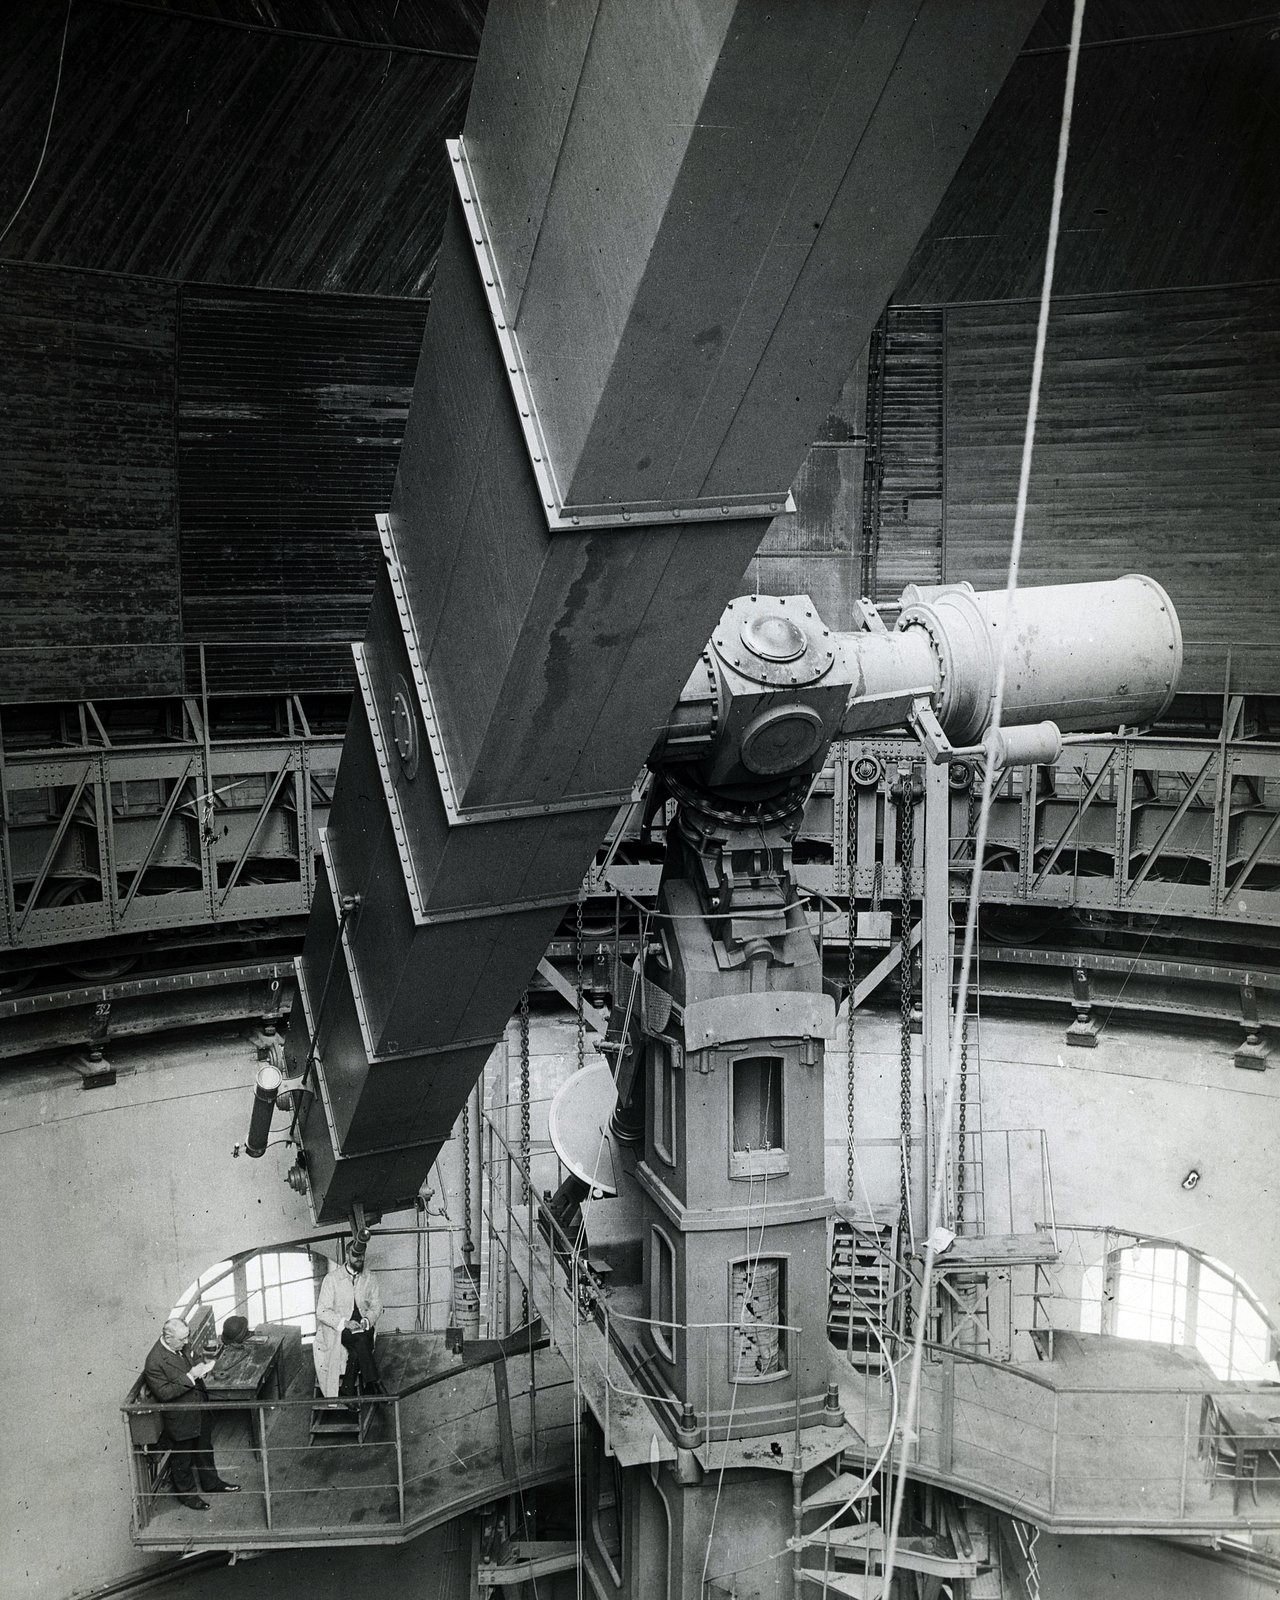 Meudon 83-cm refractor